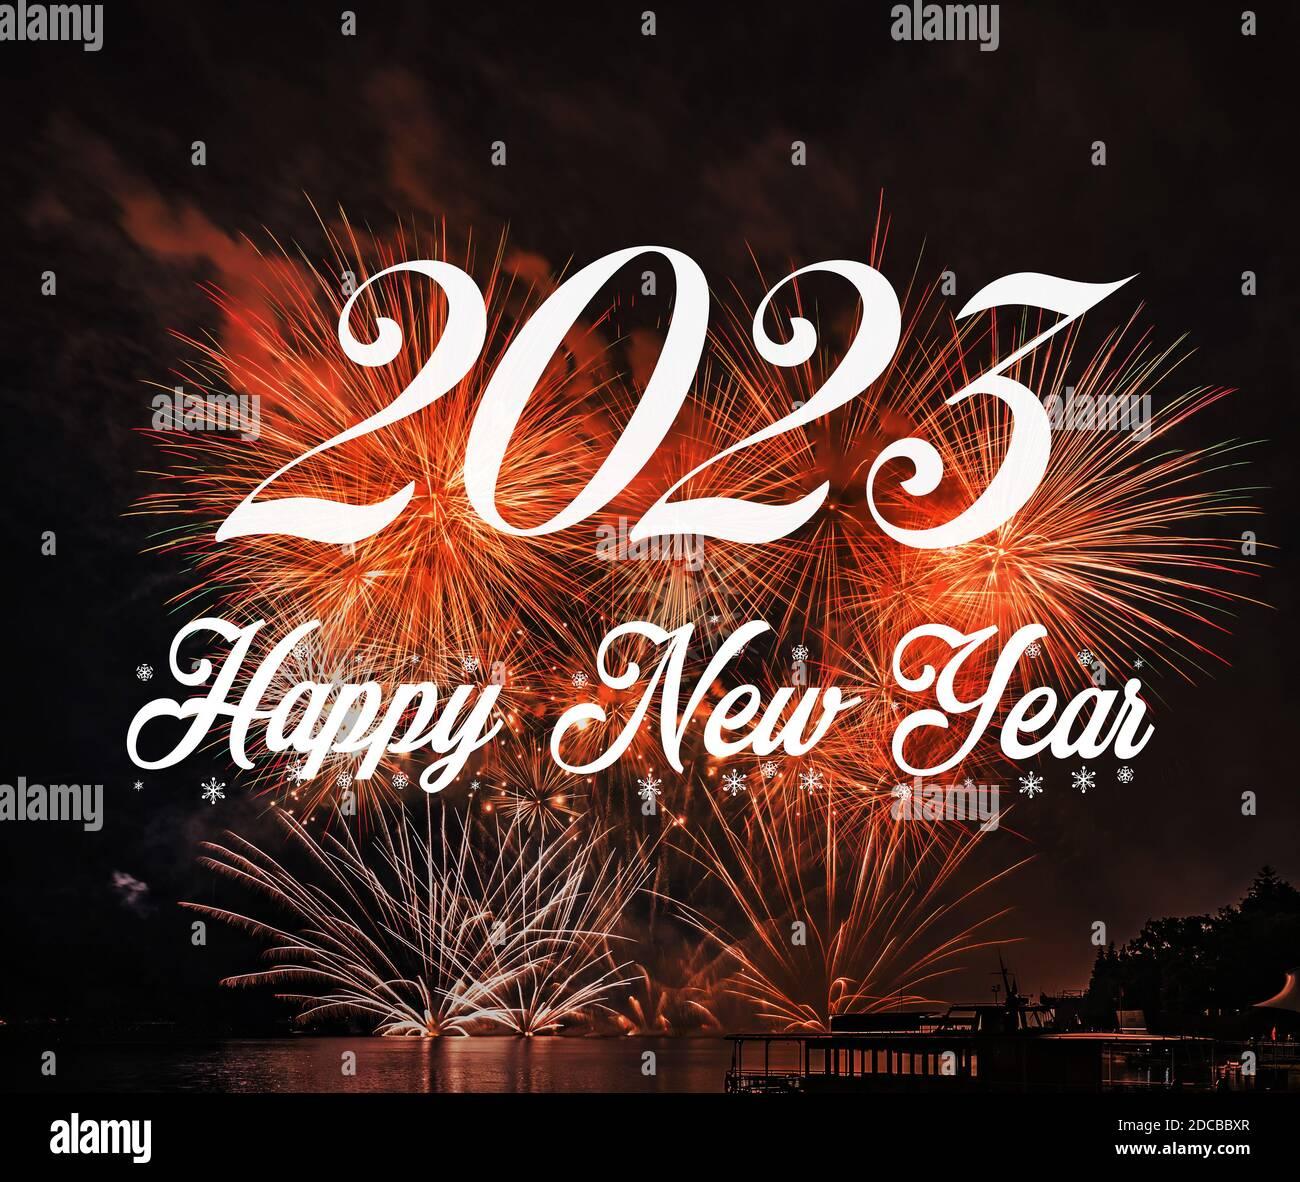 Happy New Year With Fireworks Background Celebration